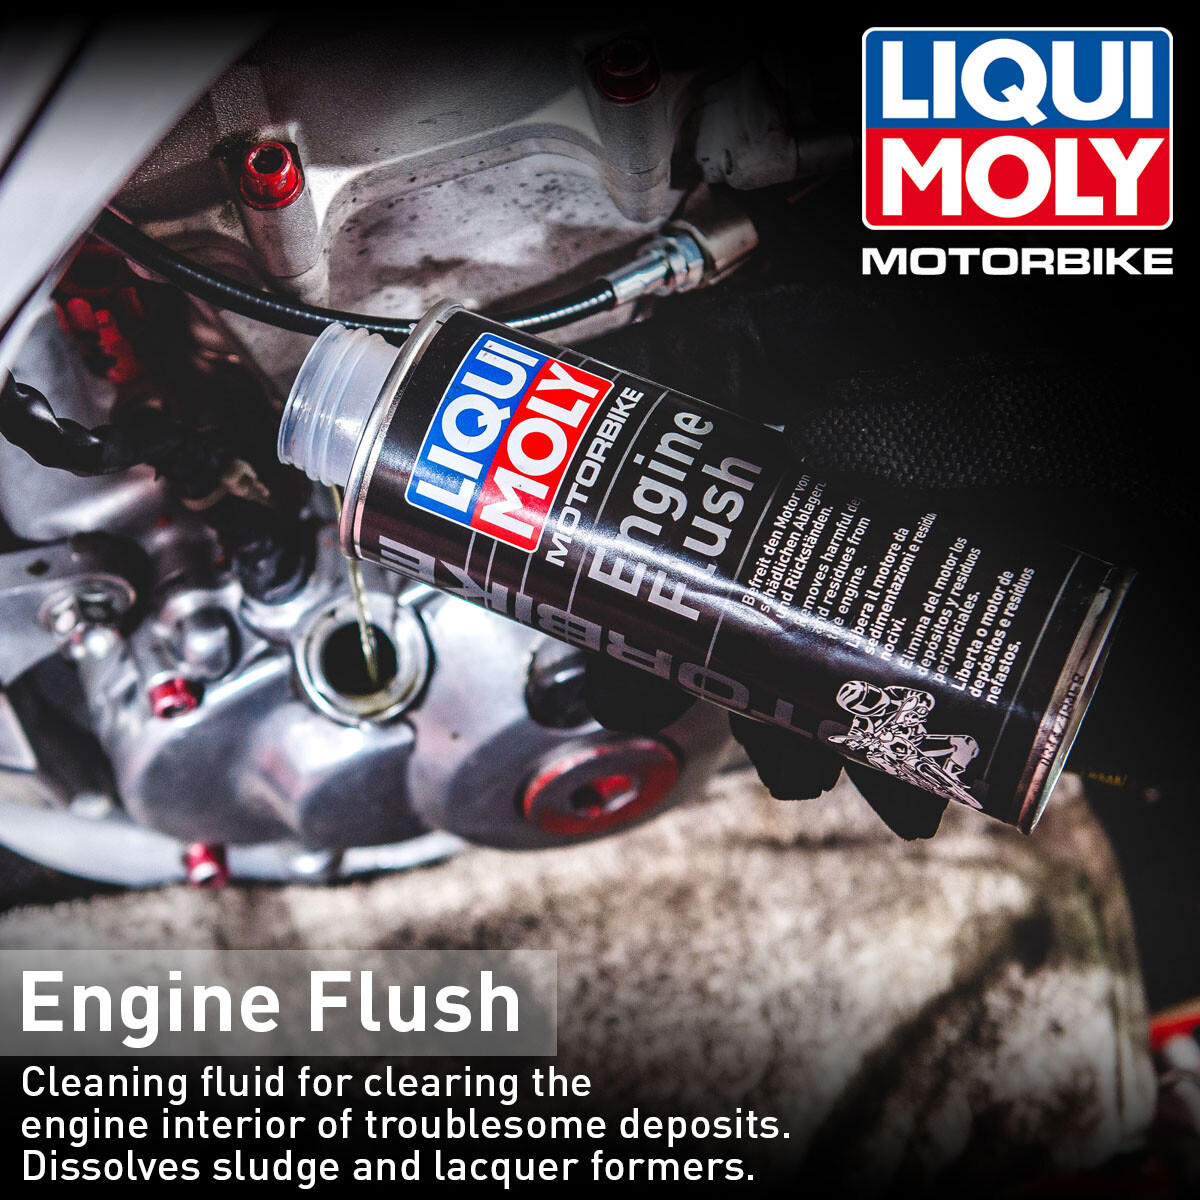 [Translate to Französich:] LIQUI MOLY Engine Flush